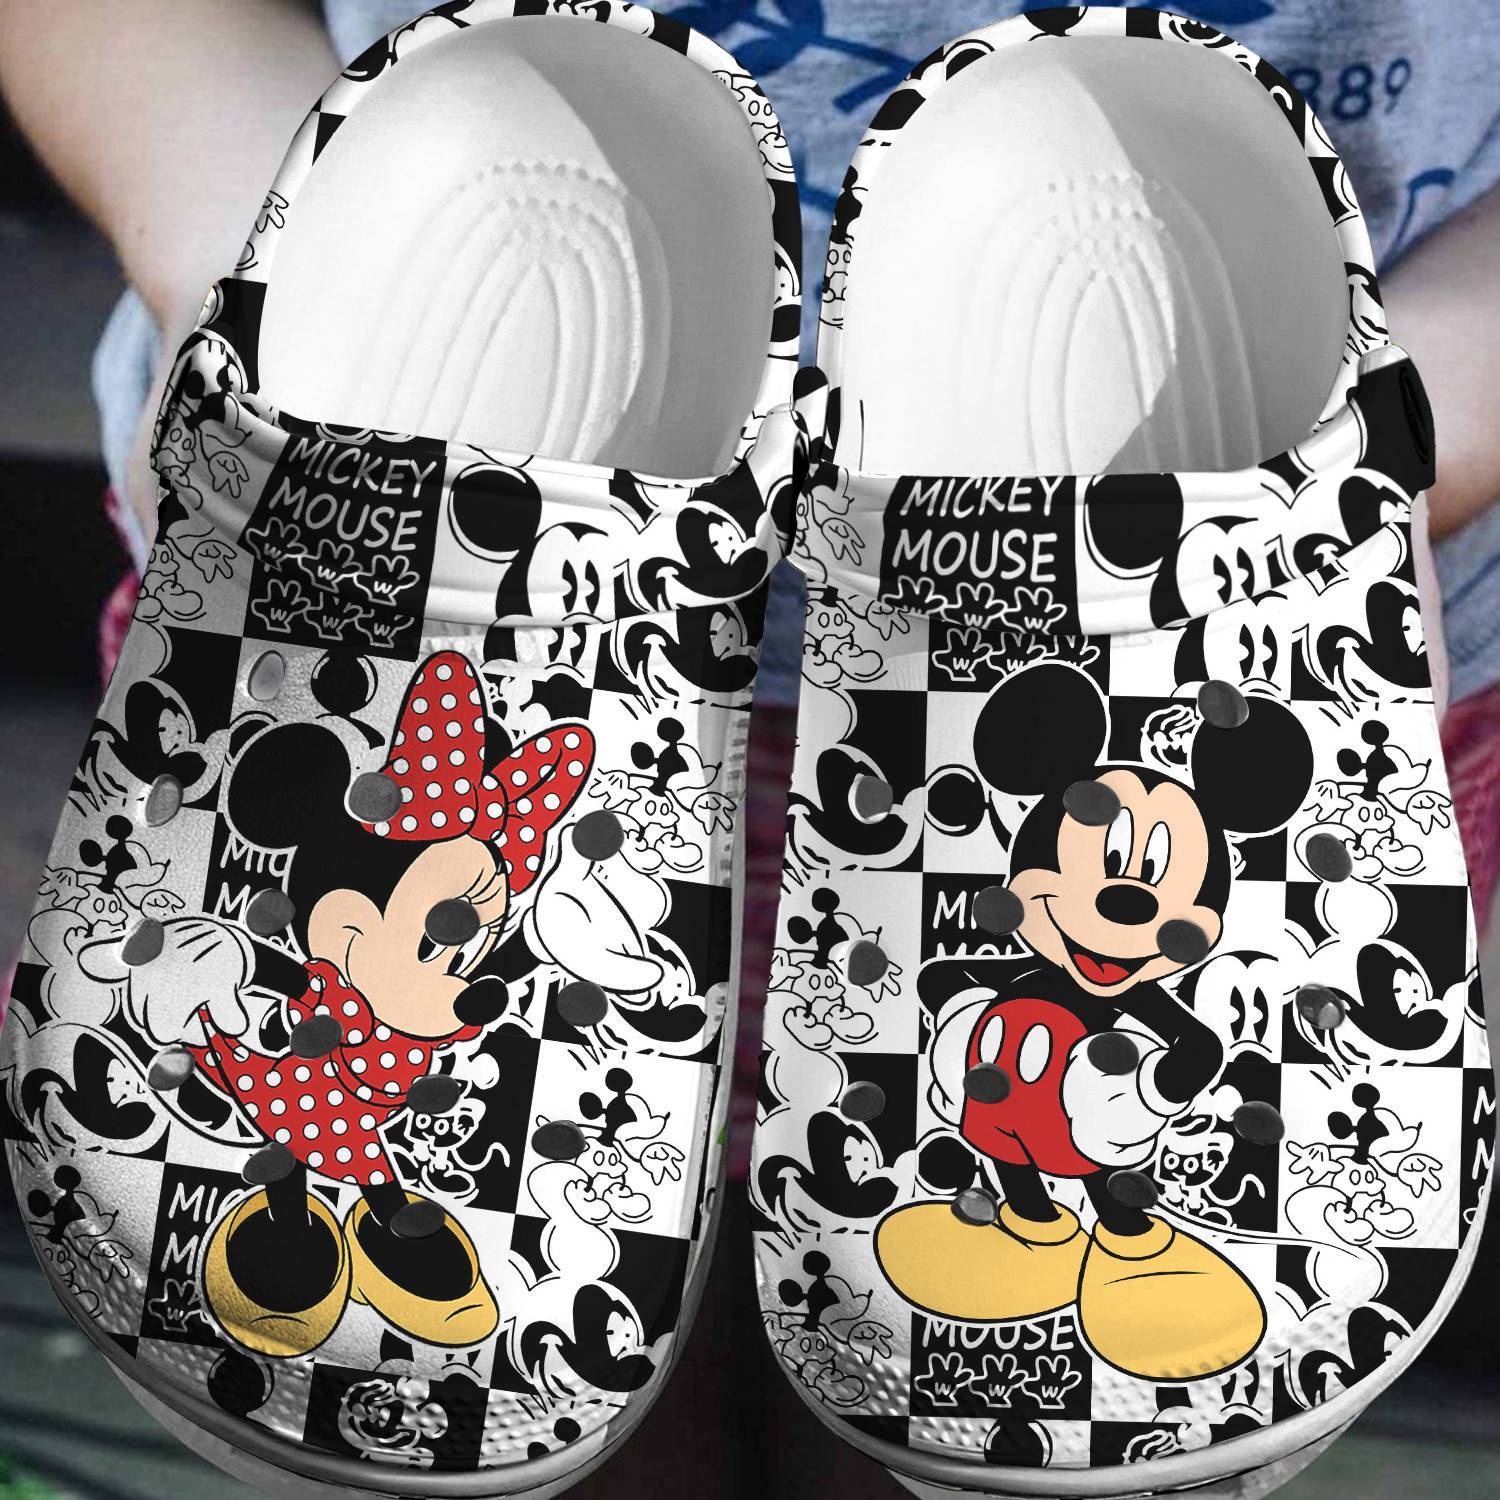 Classic Characters, Modern Comfort: Mickey Minnie Crocs 3D Clog Shoes